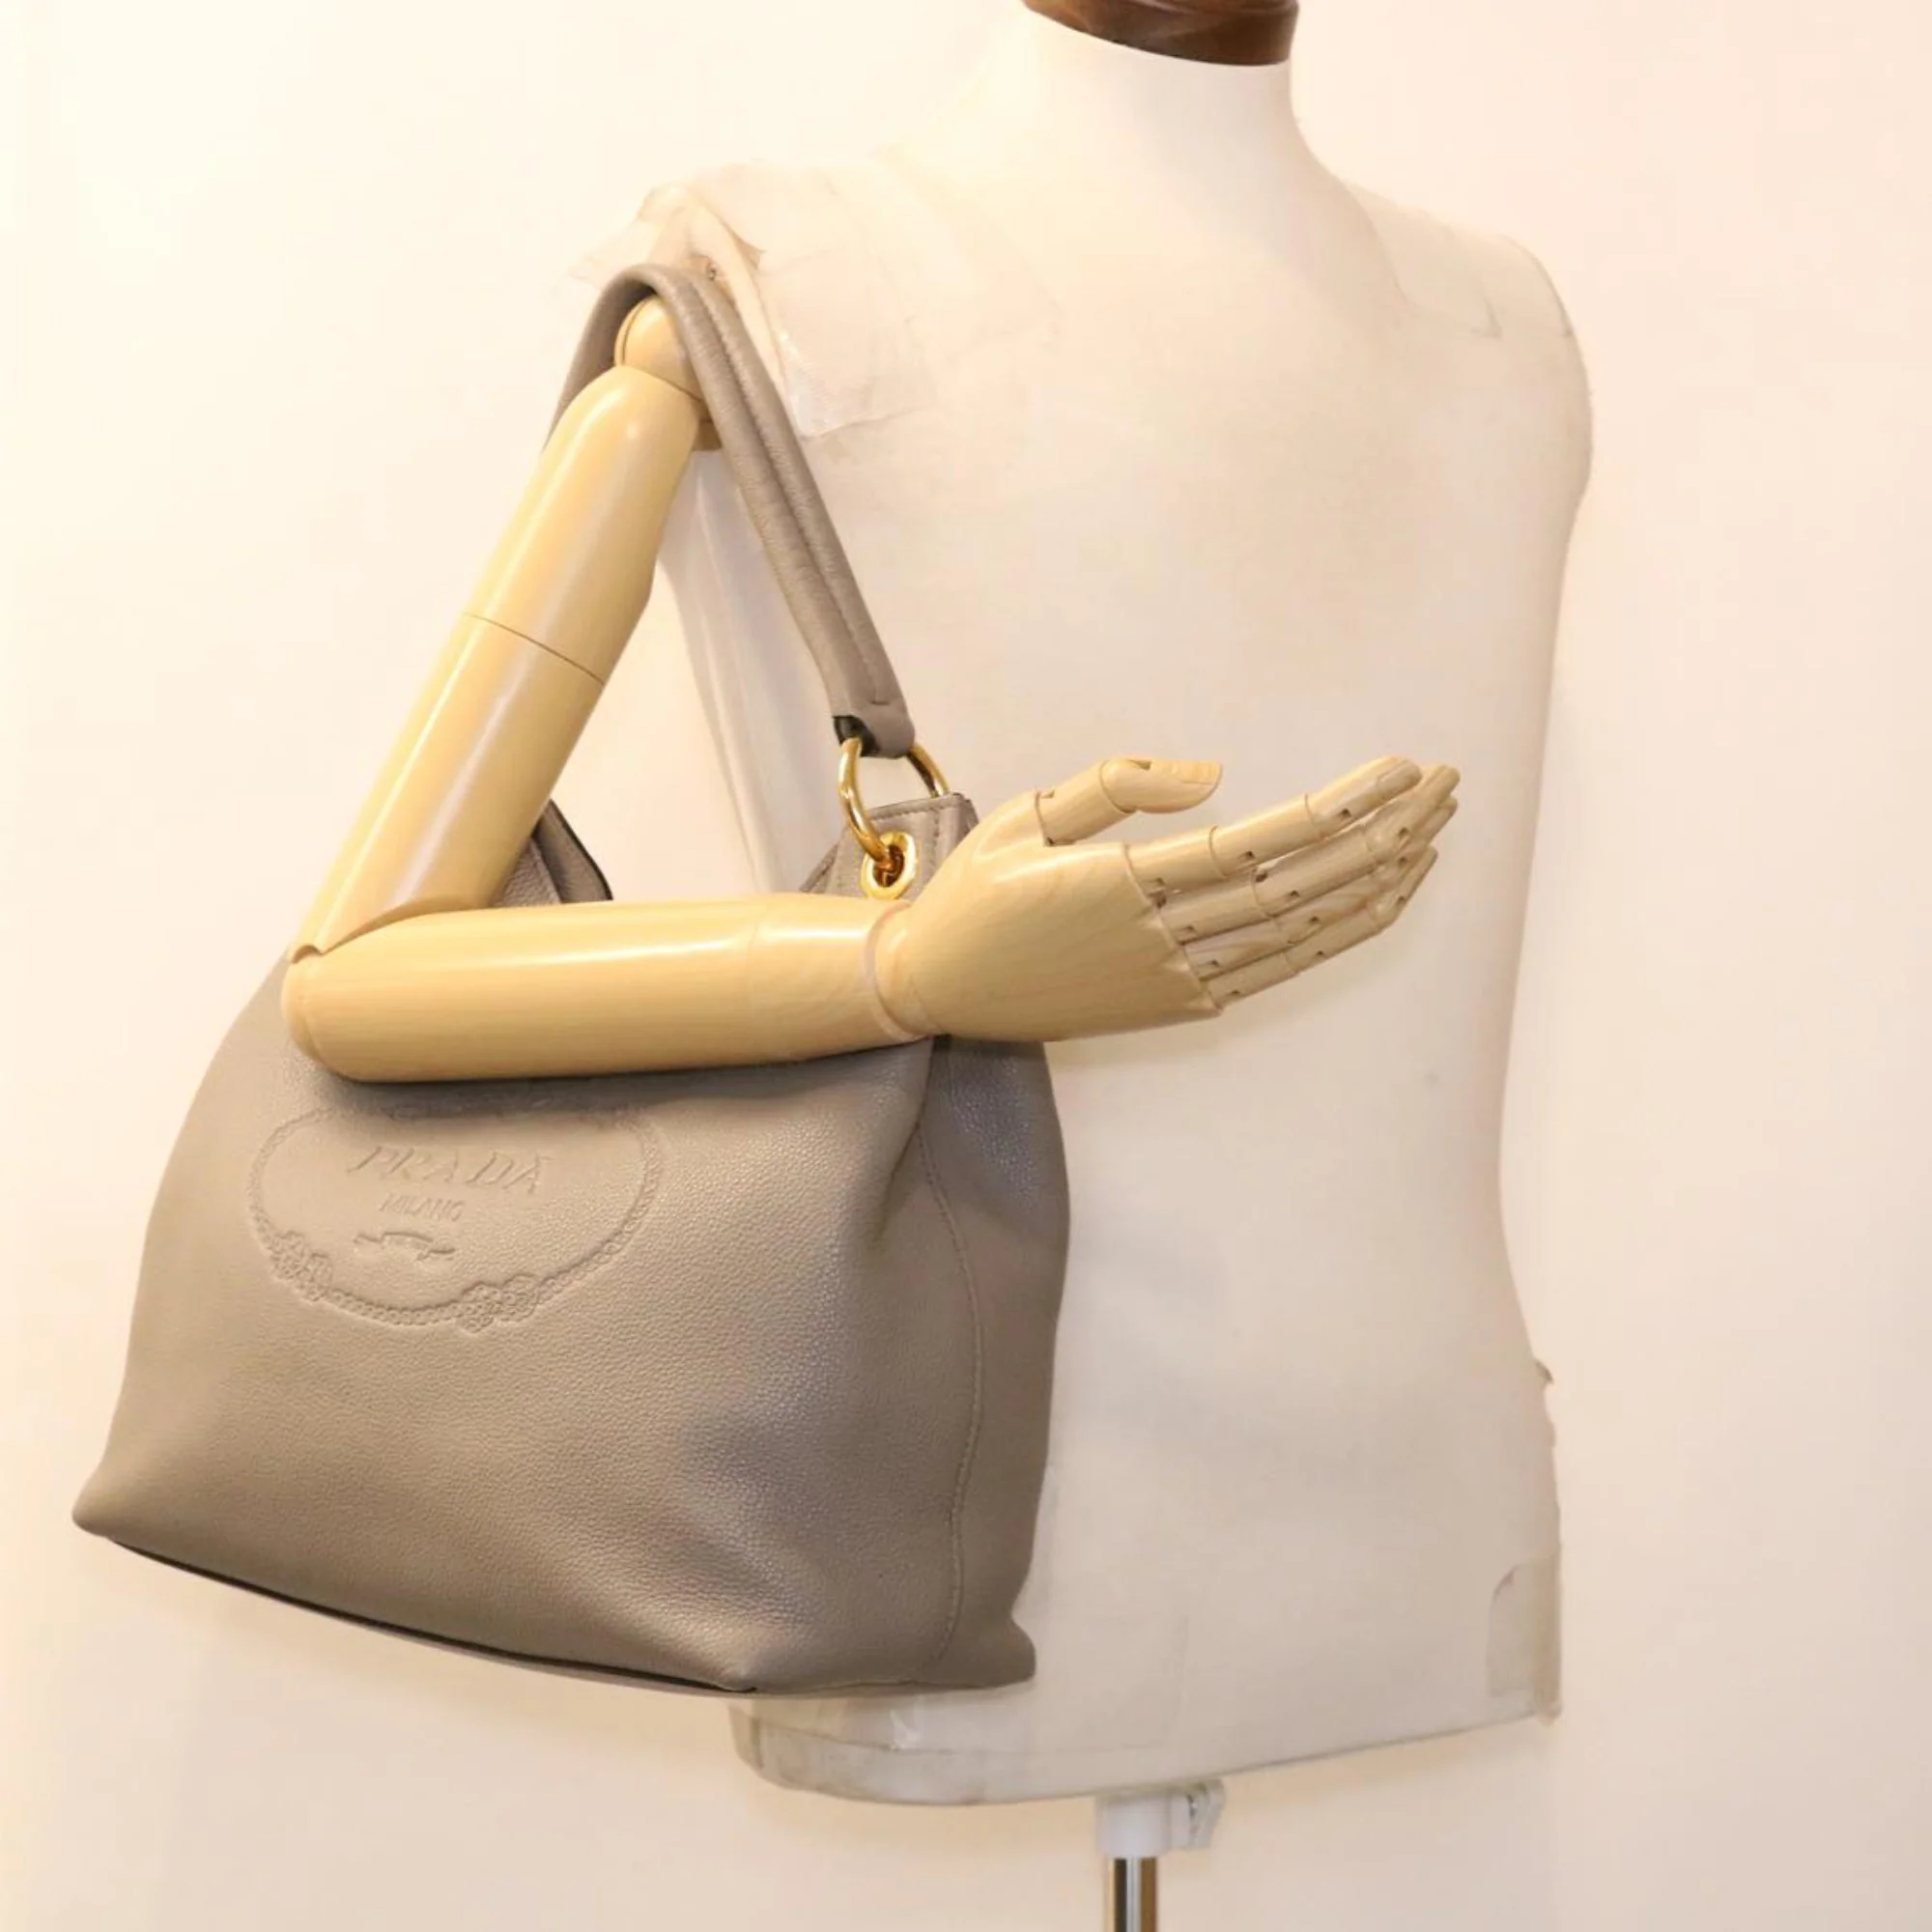 Women Prada Shoulder Bag - Grey $7899